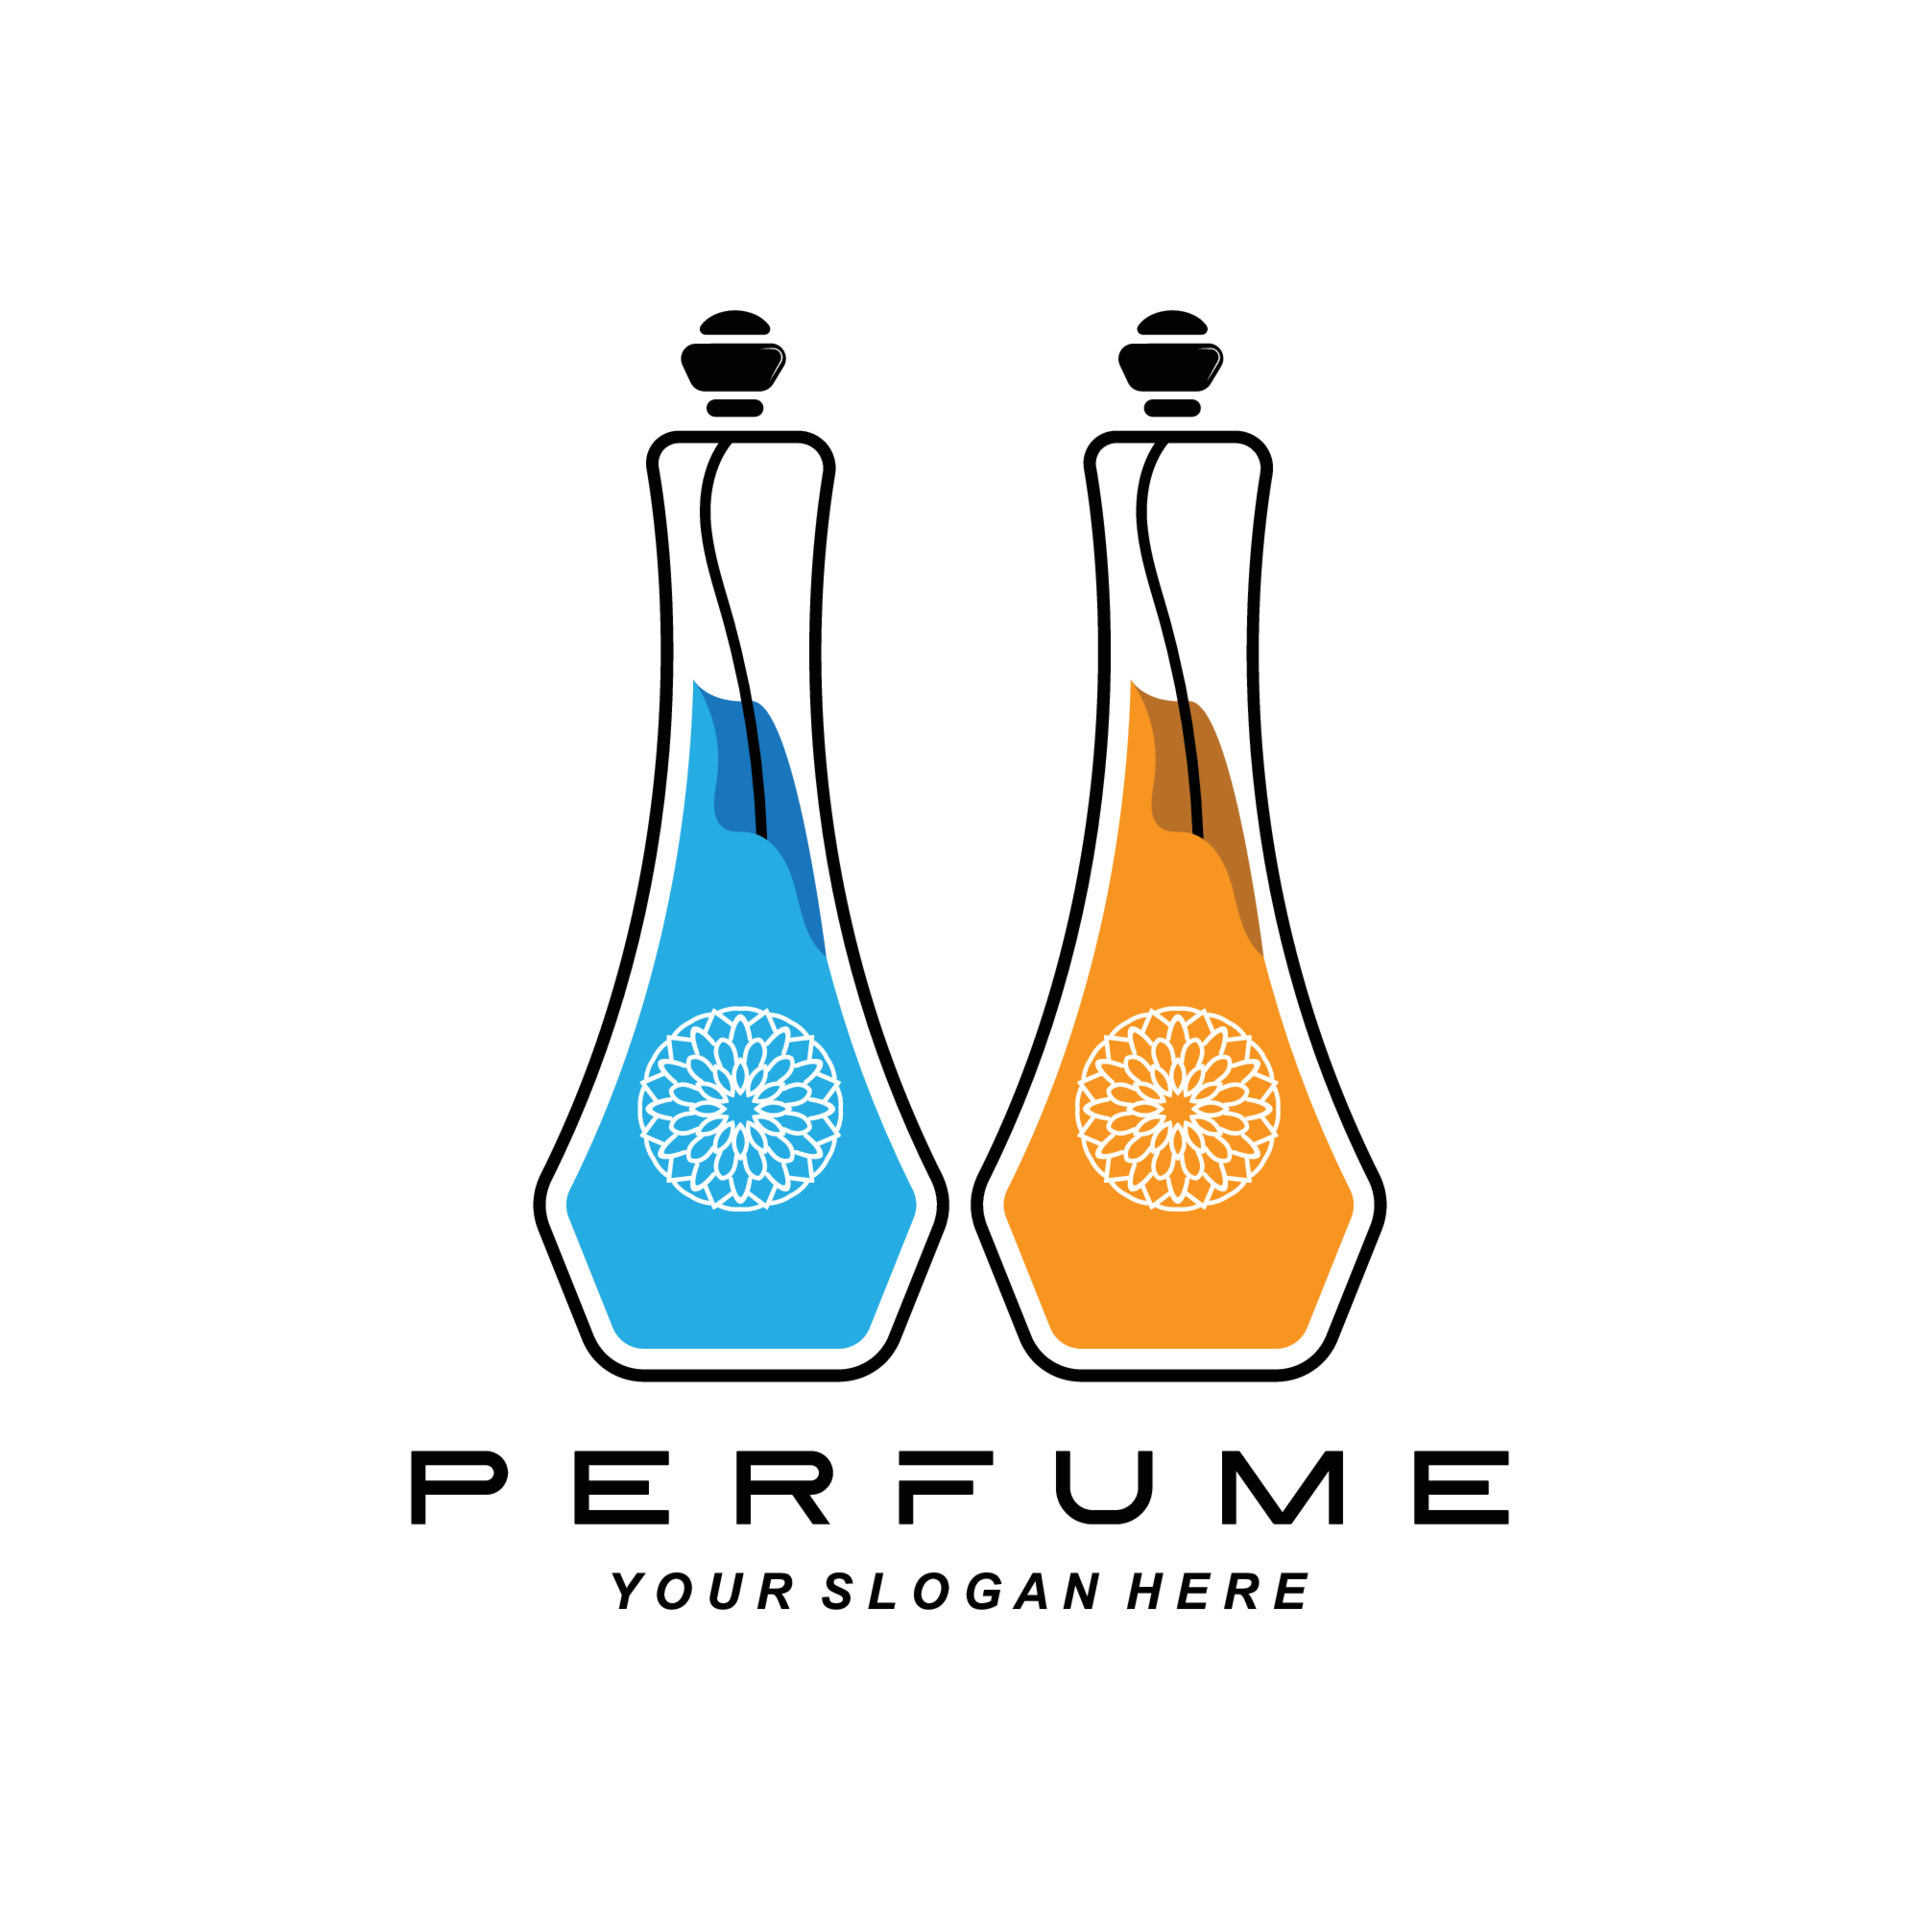 Luxury perfume bottle logo design, illustration for cosmetics, beauty,  salon, company products, 9003334 Vector Art at Vecteezy